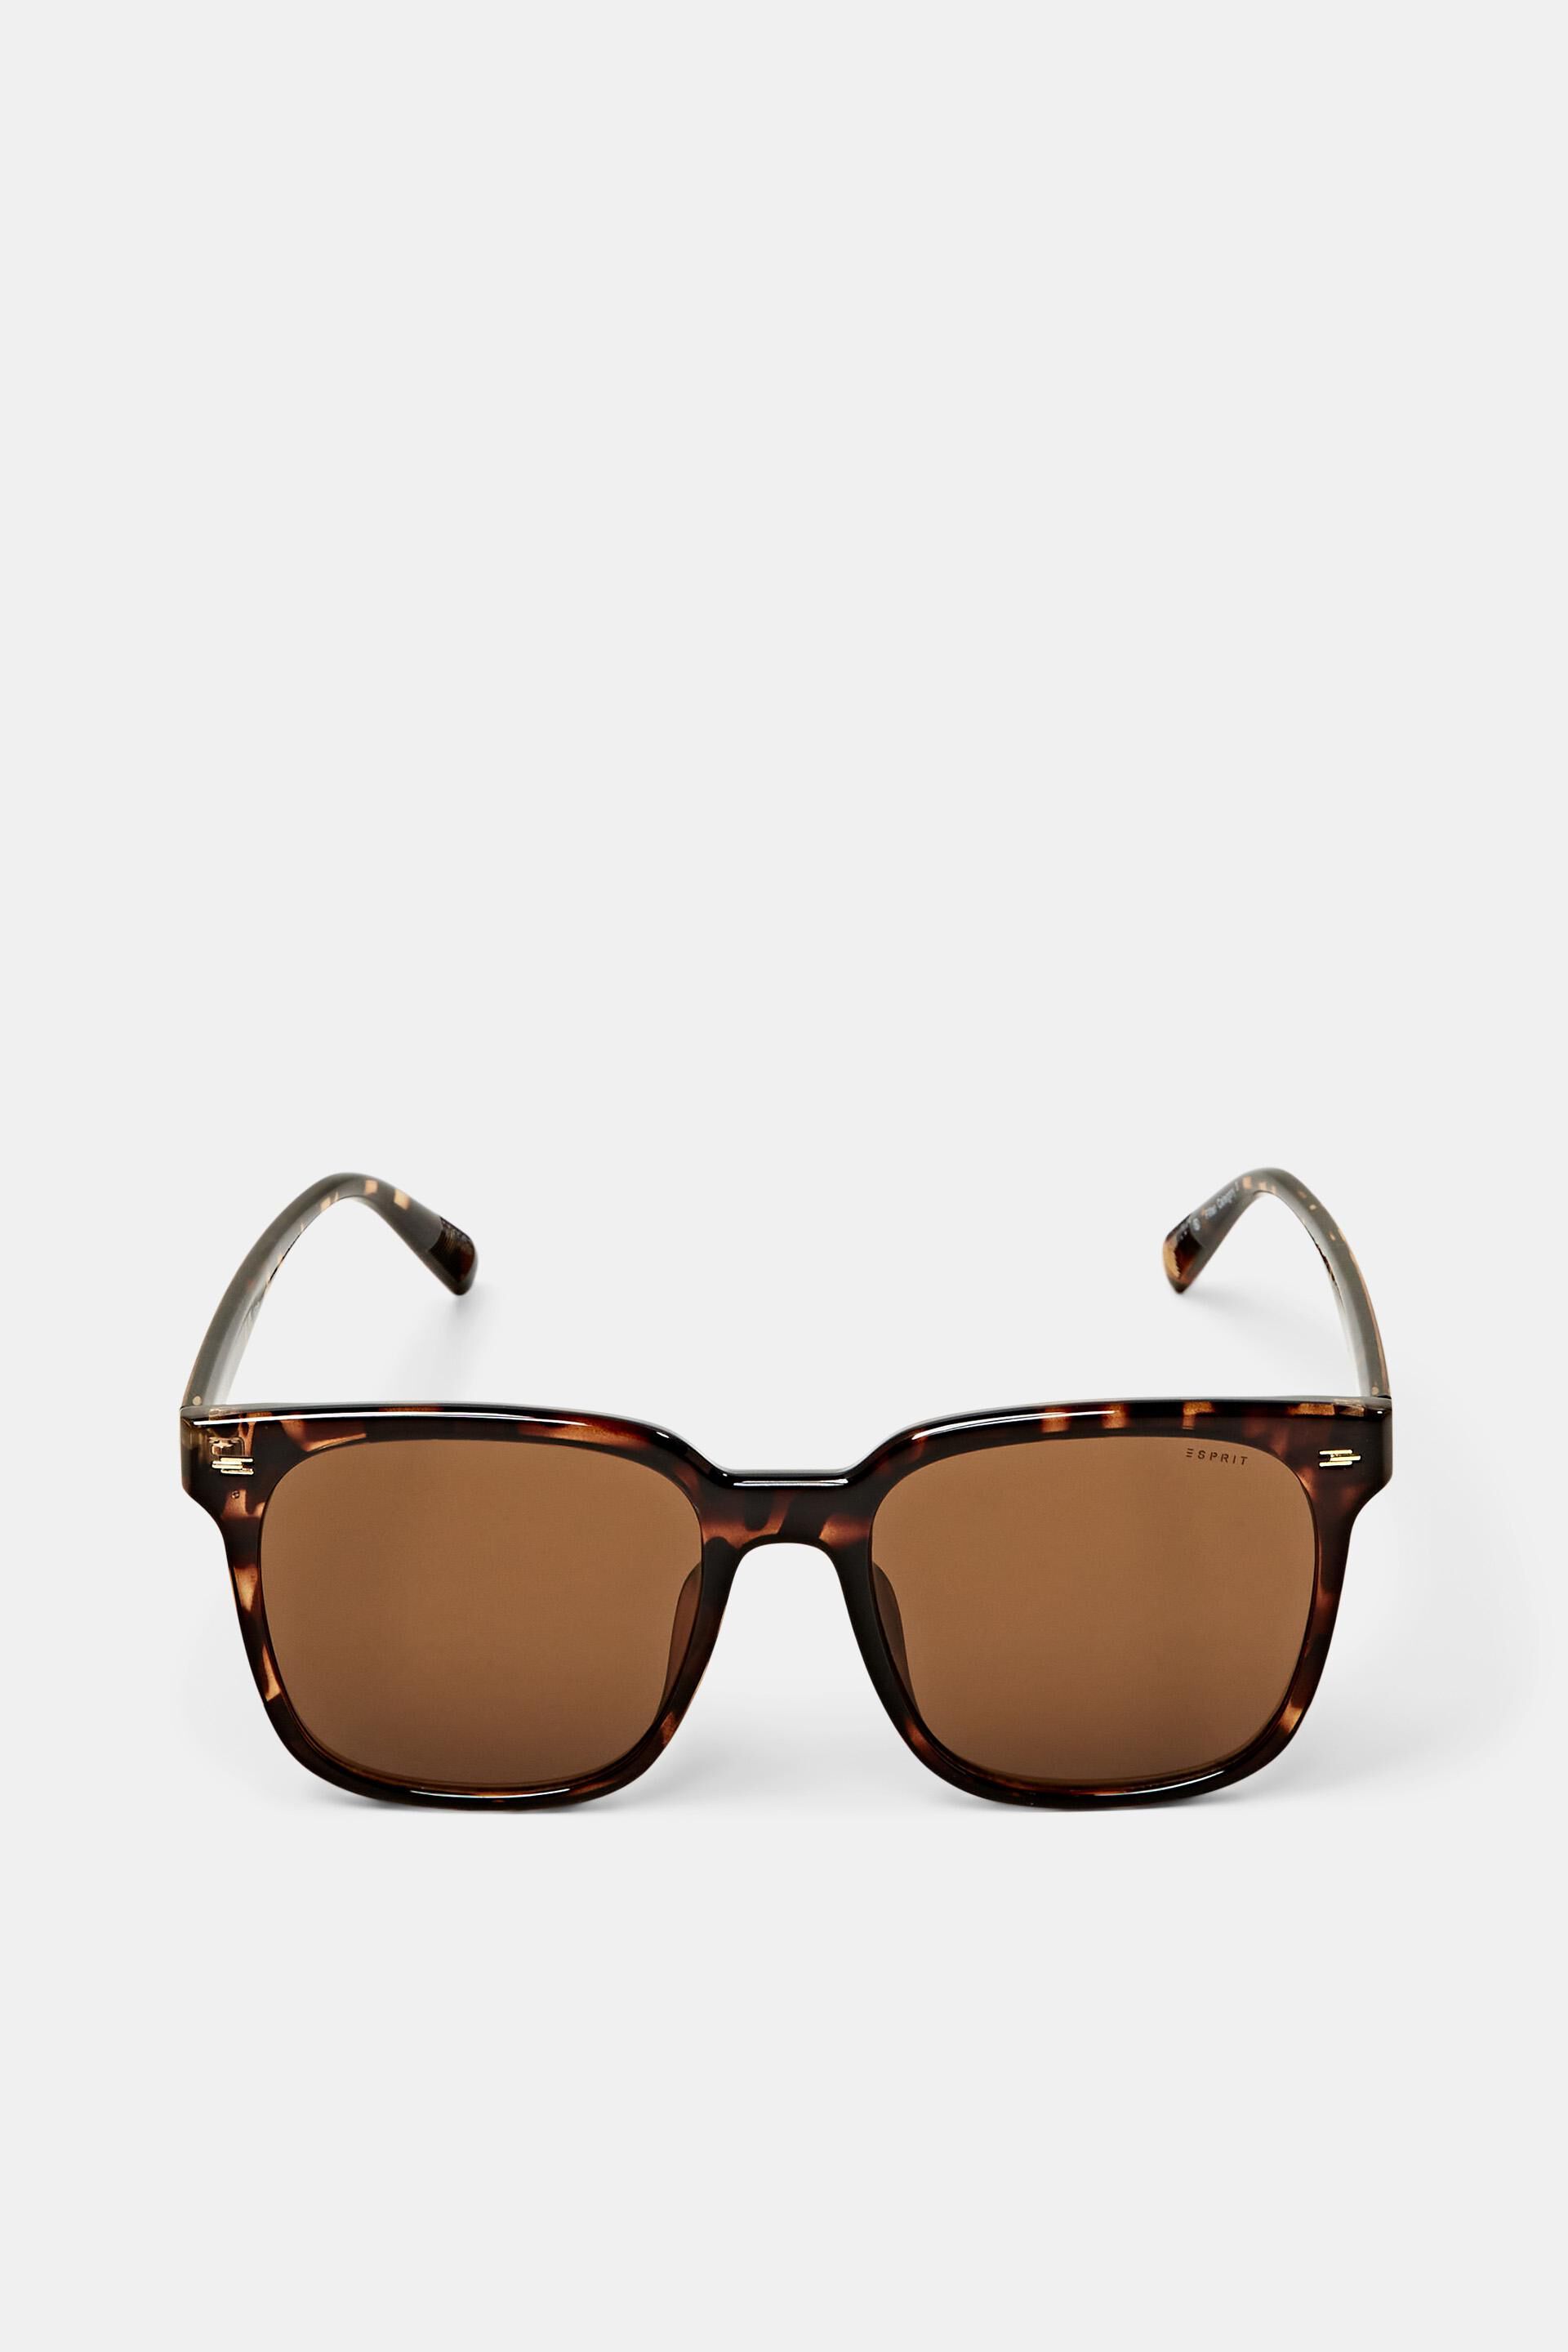 Esprit Online Store Lightweight acetate sunglasses